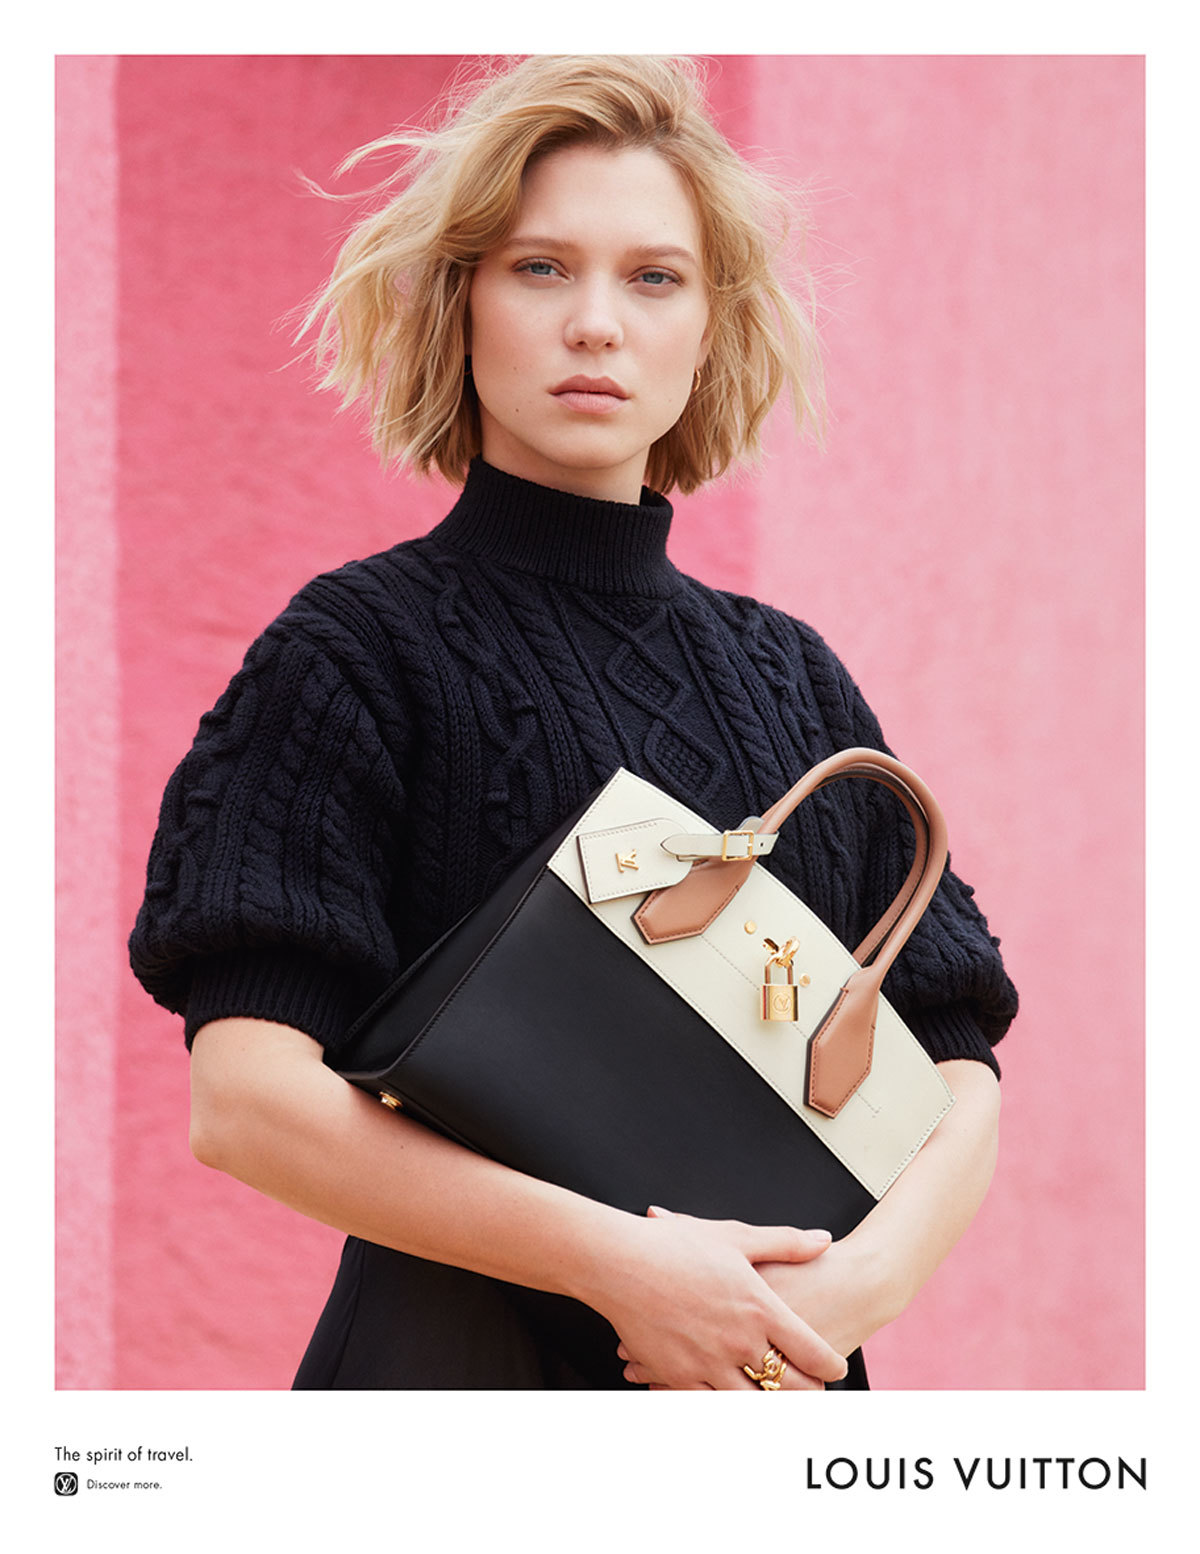 Lea Seydoux is New Face of Louis Vuitton